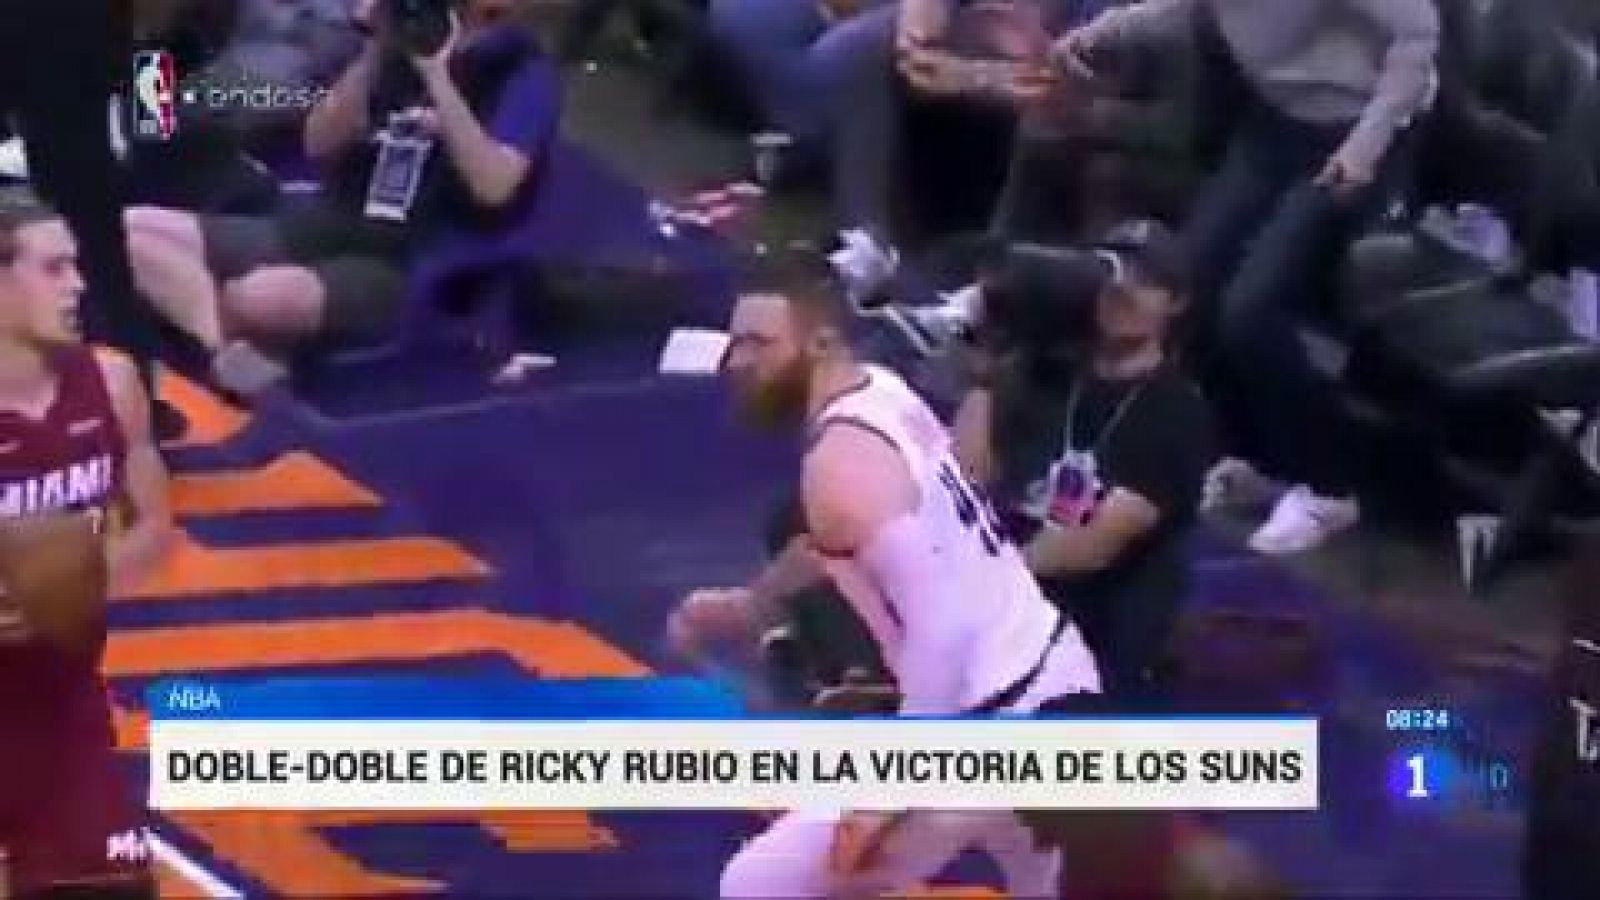 NBA | Ricky hace doble-doble, pero pierden los Suns - RTVE.es